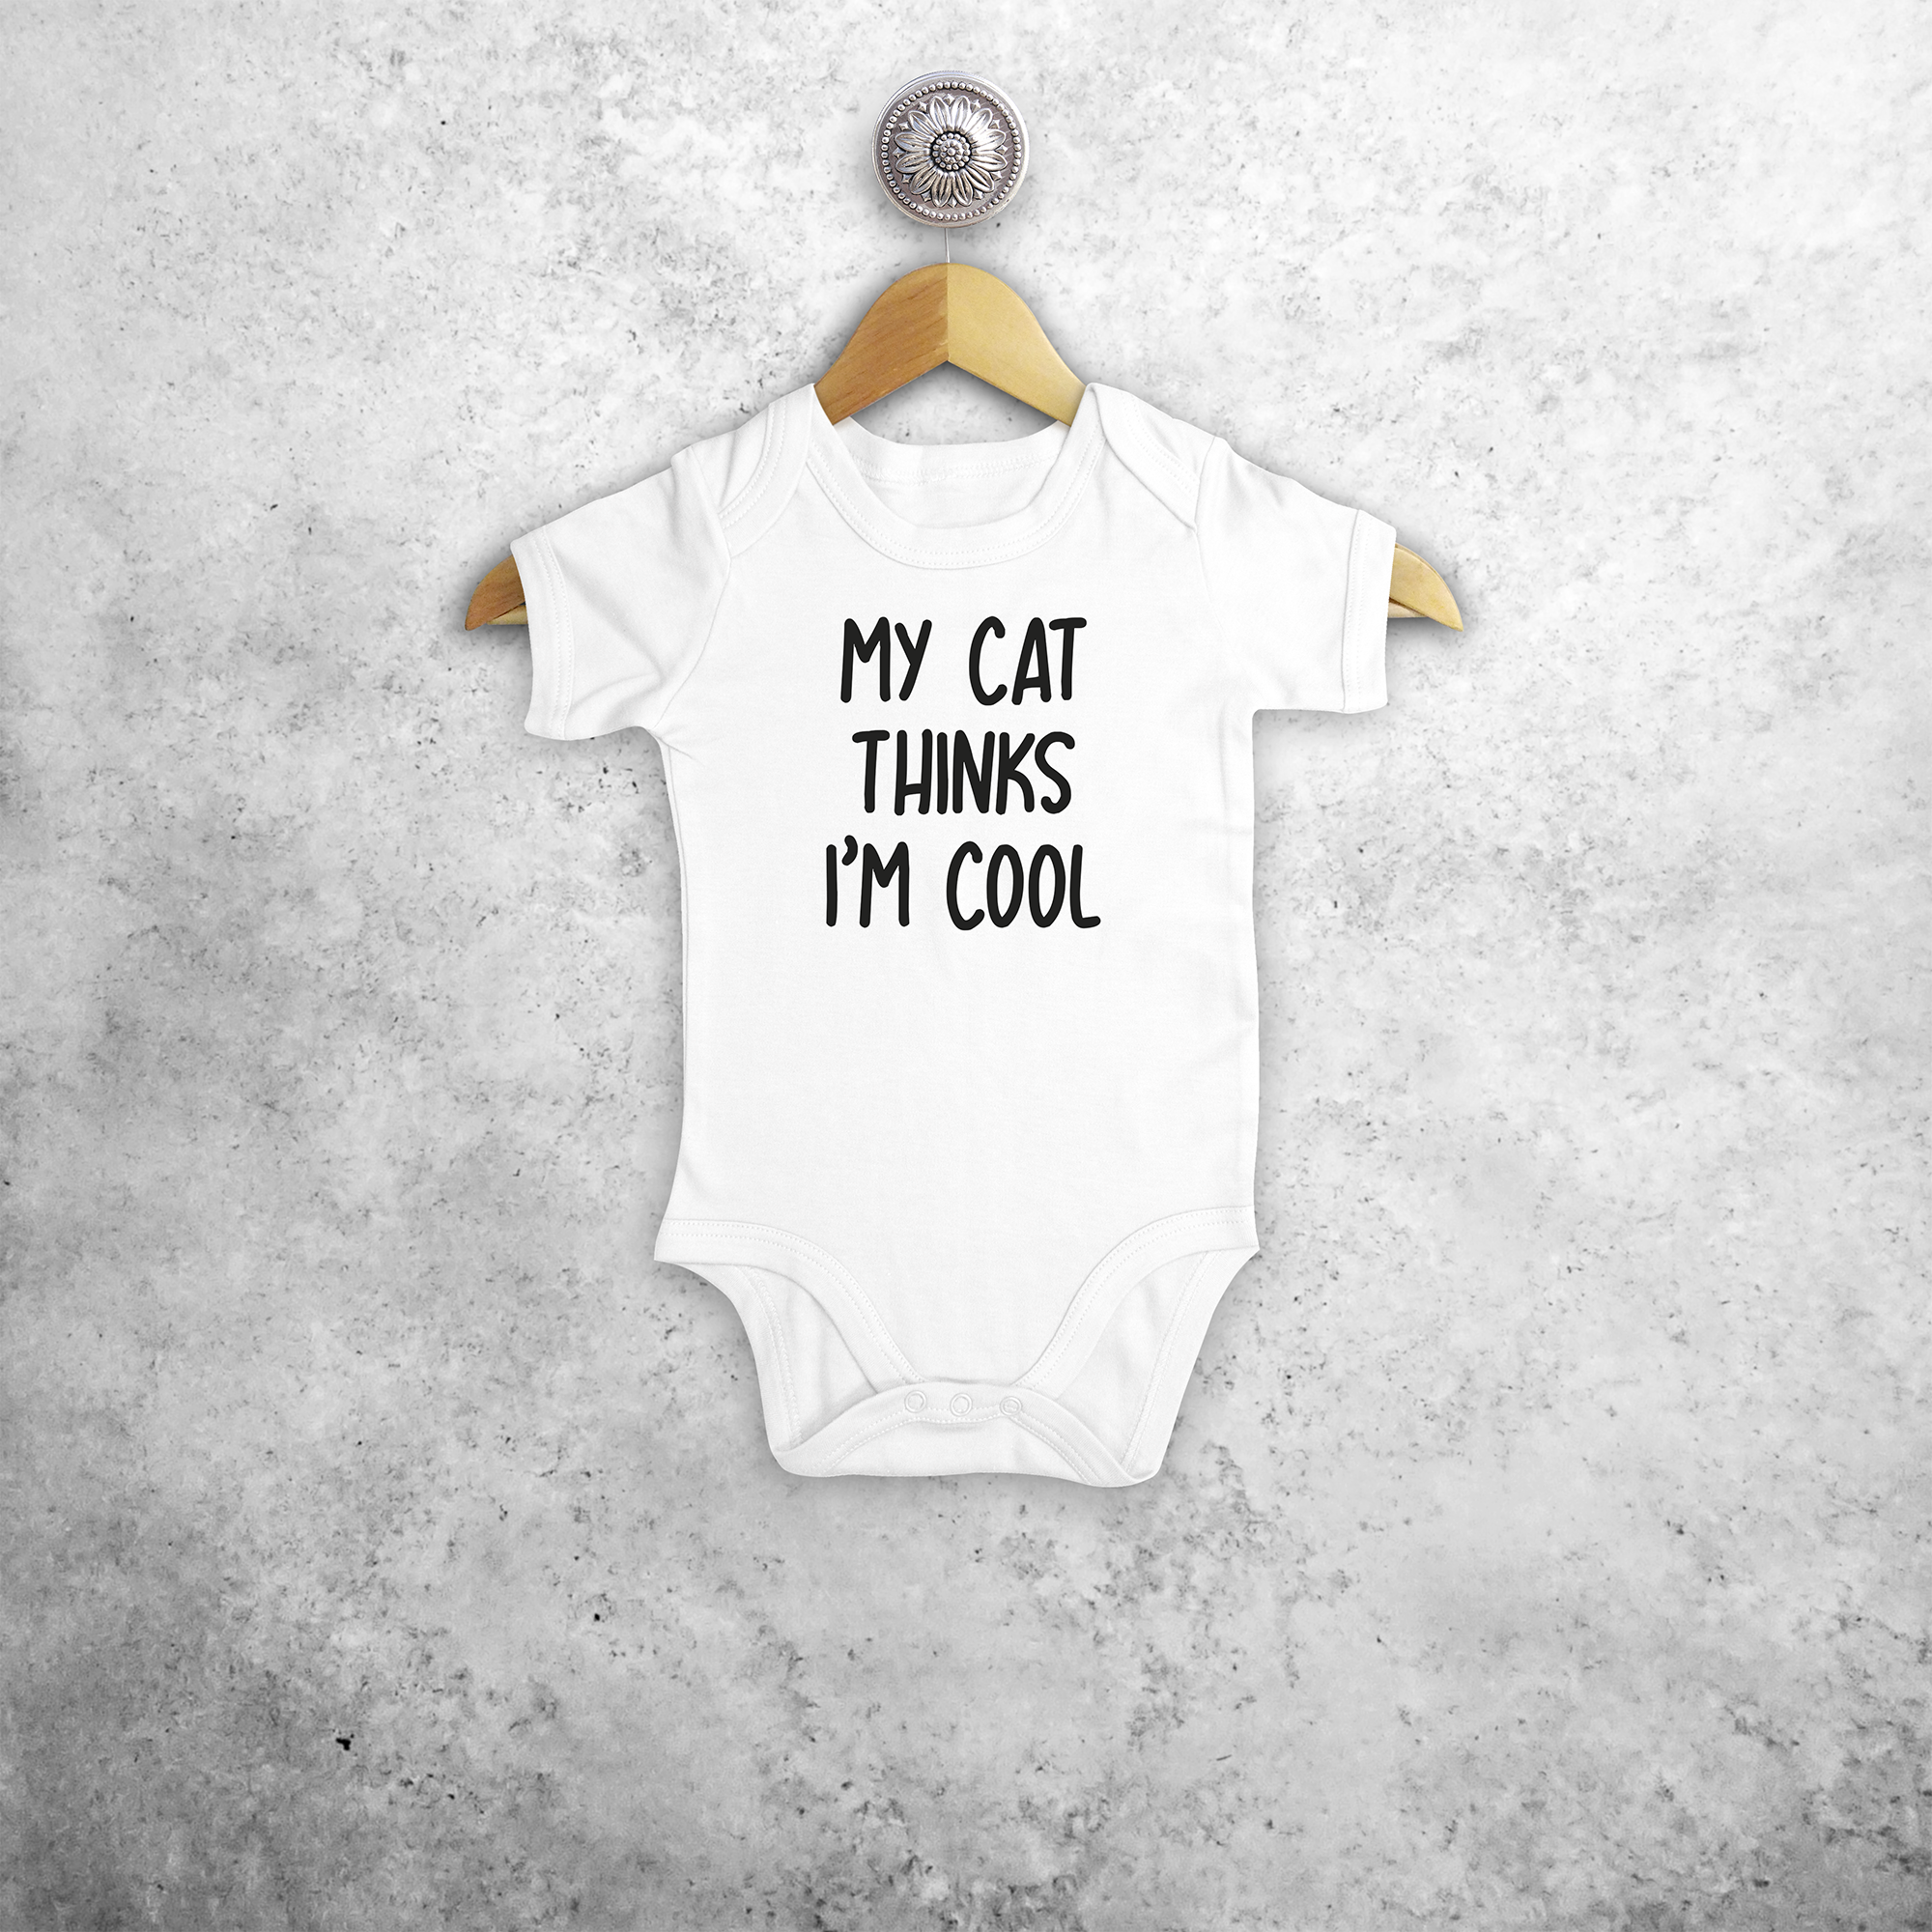 'My cat thinks I'm cool' baby shortsleeve bodysuit